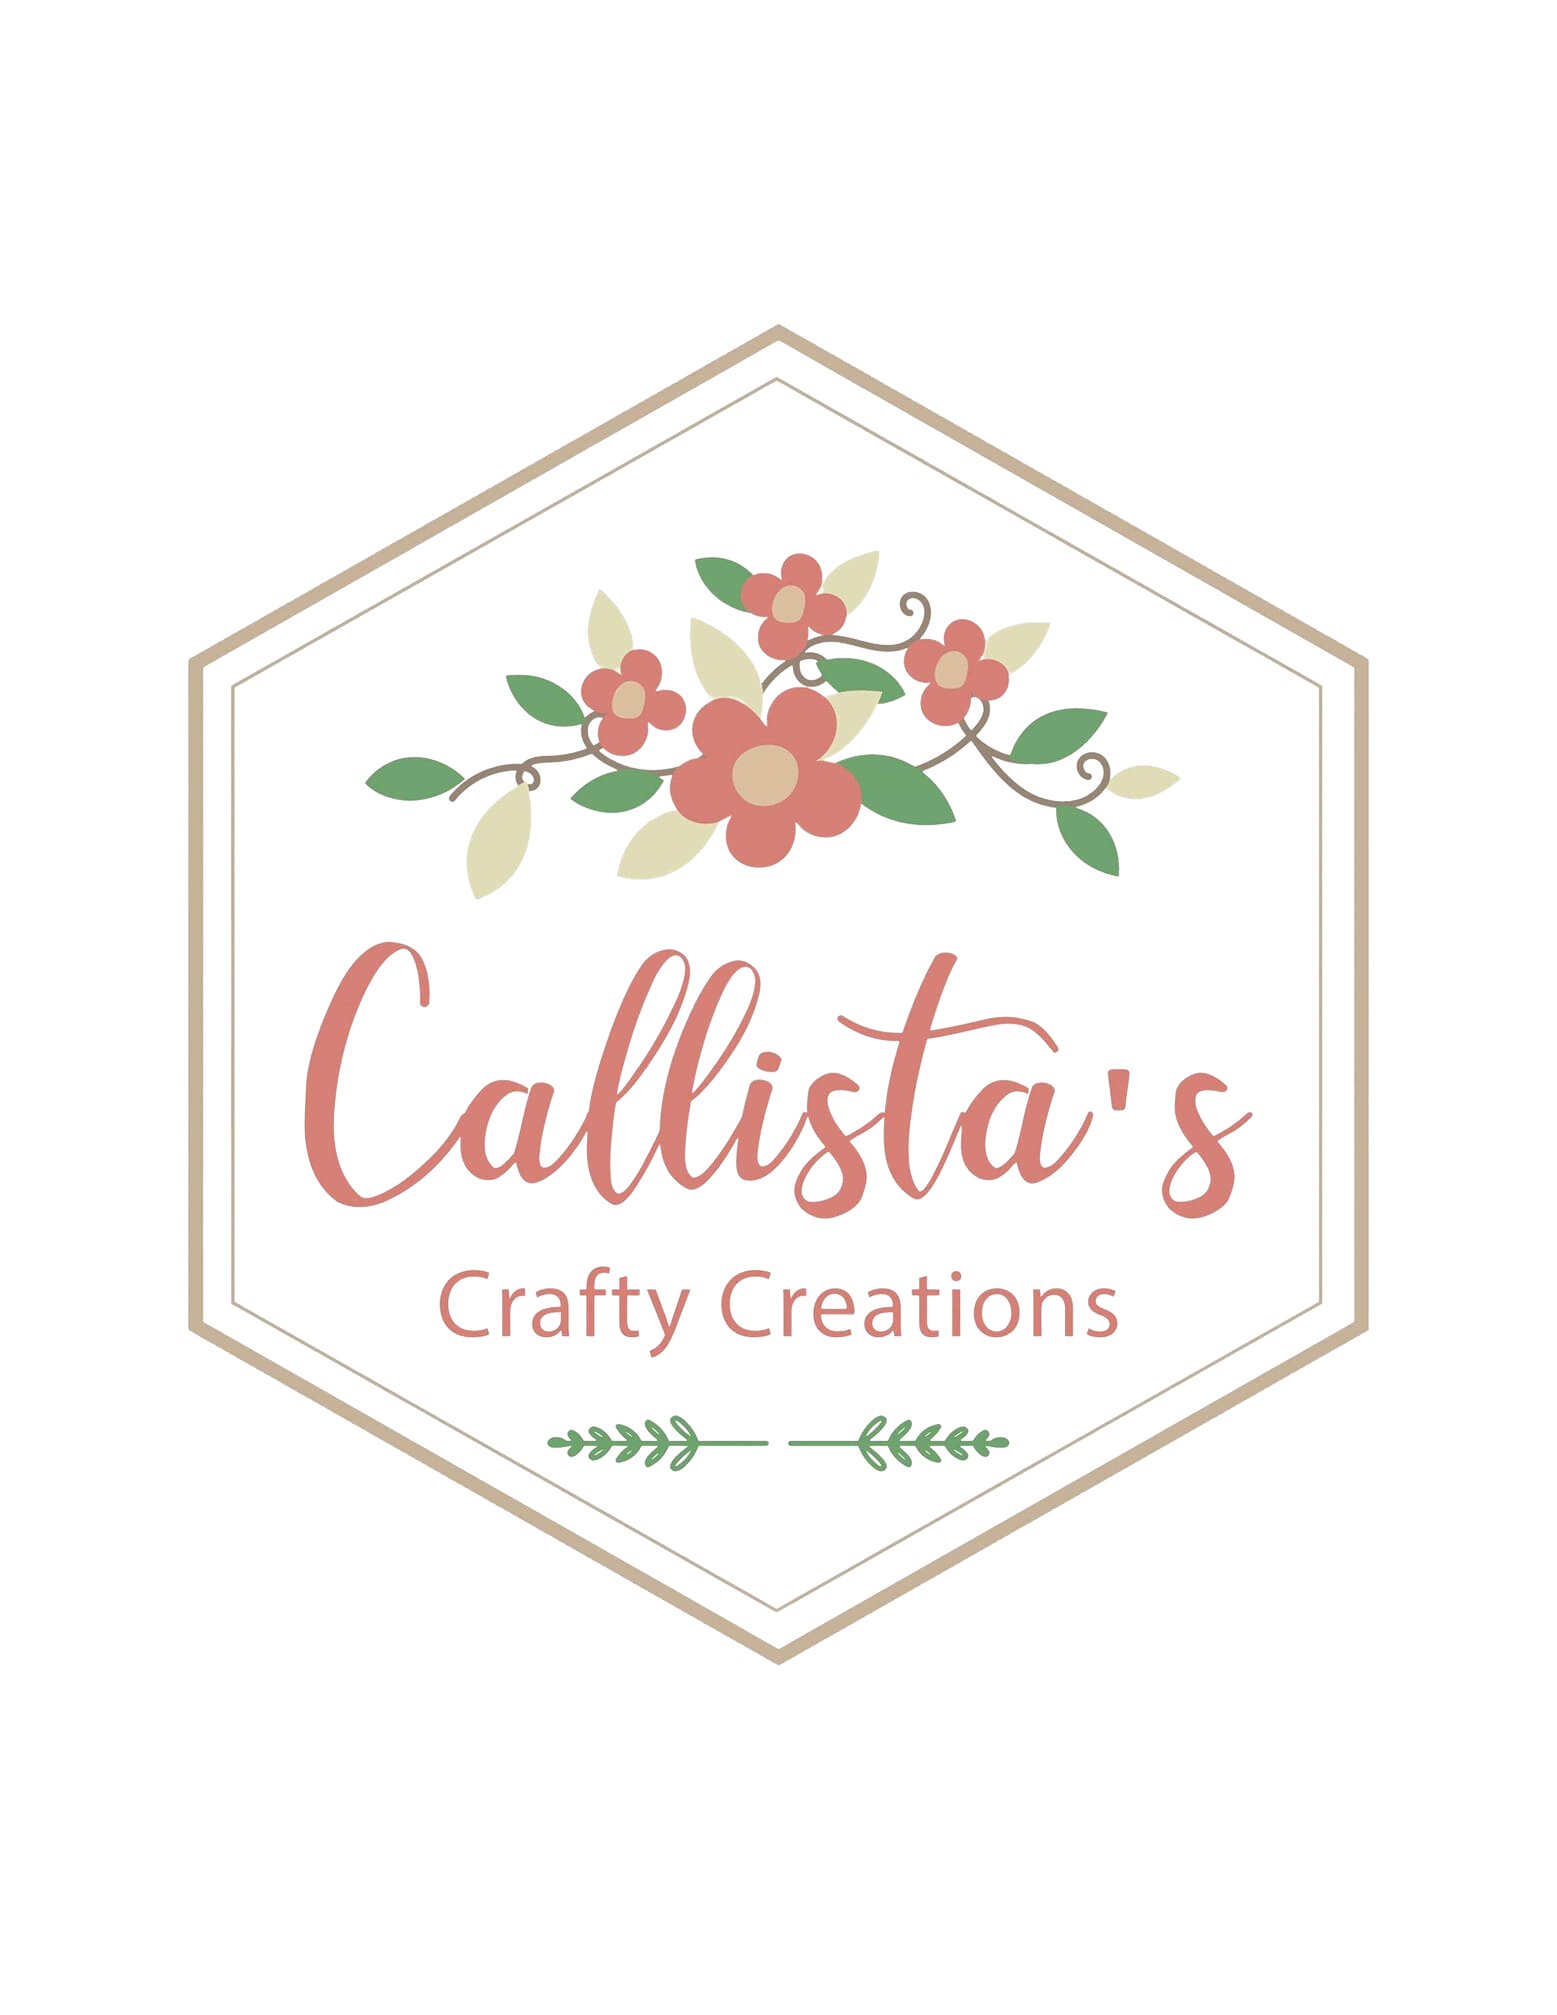 CALLISTA'S CRAFTY CREATIONS